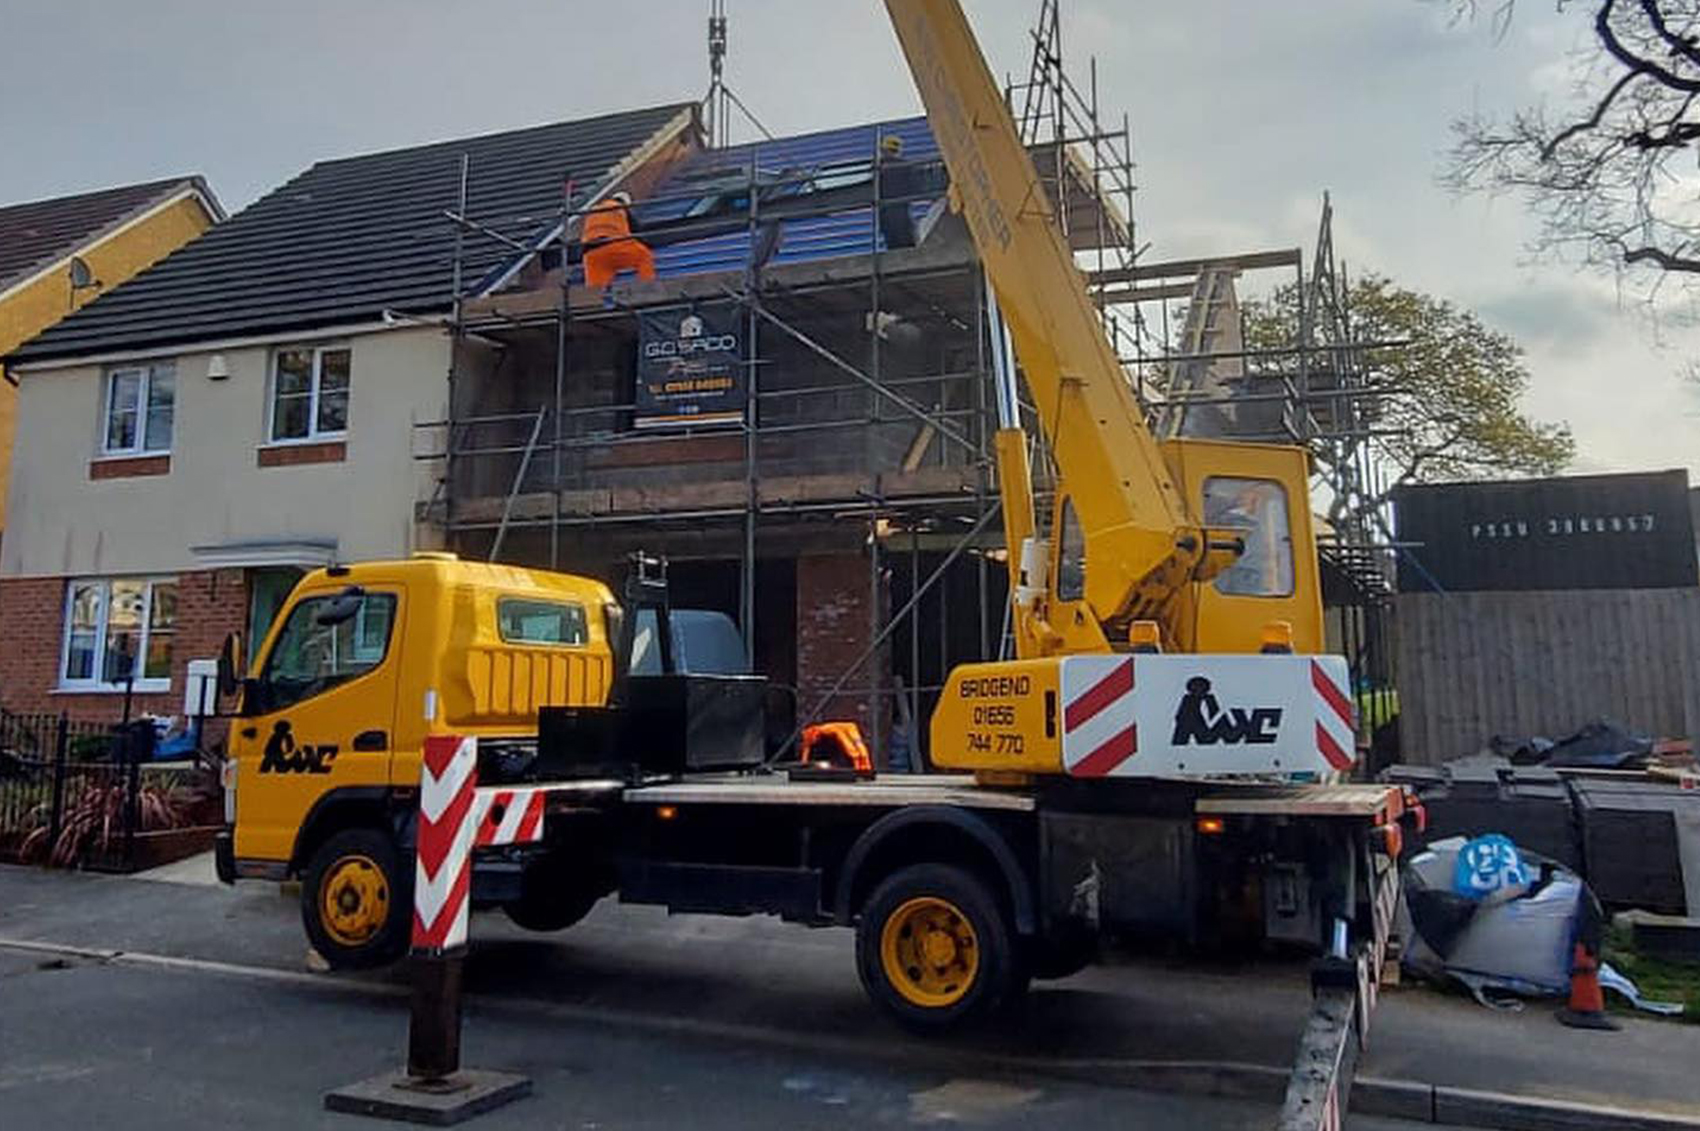 Crane on site in Bridgend